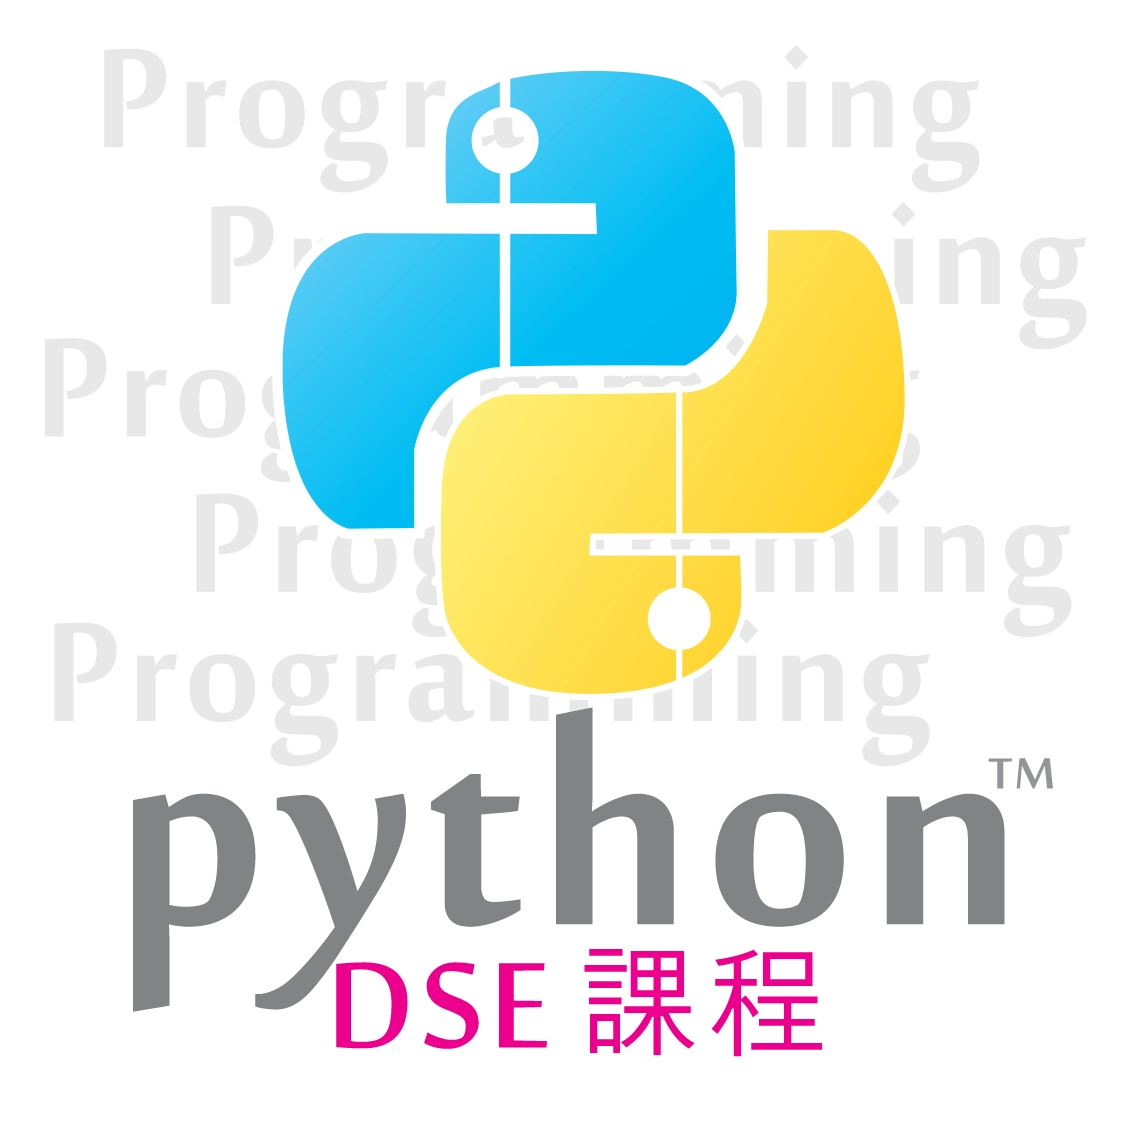 Python (DSE 課程)